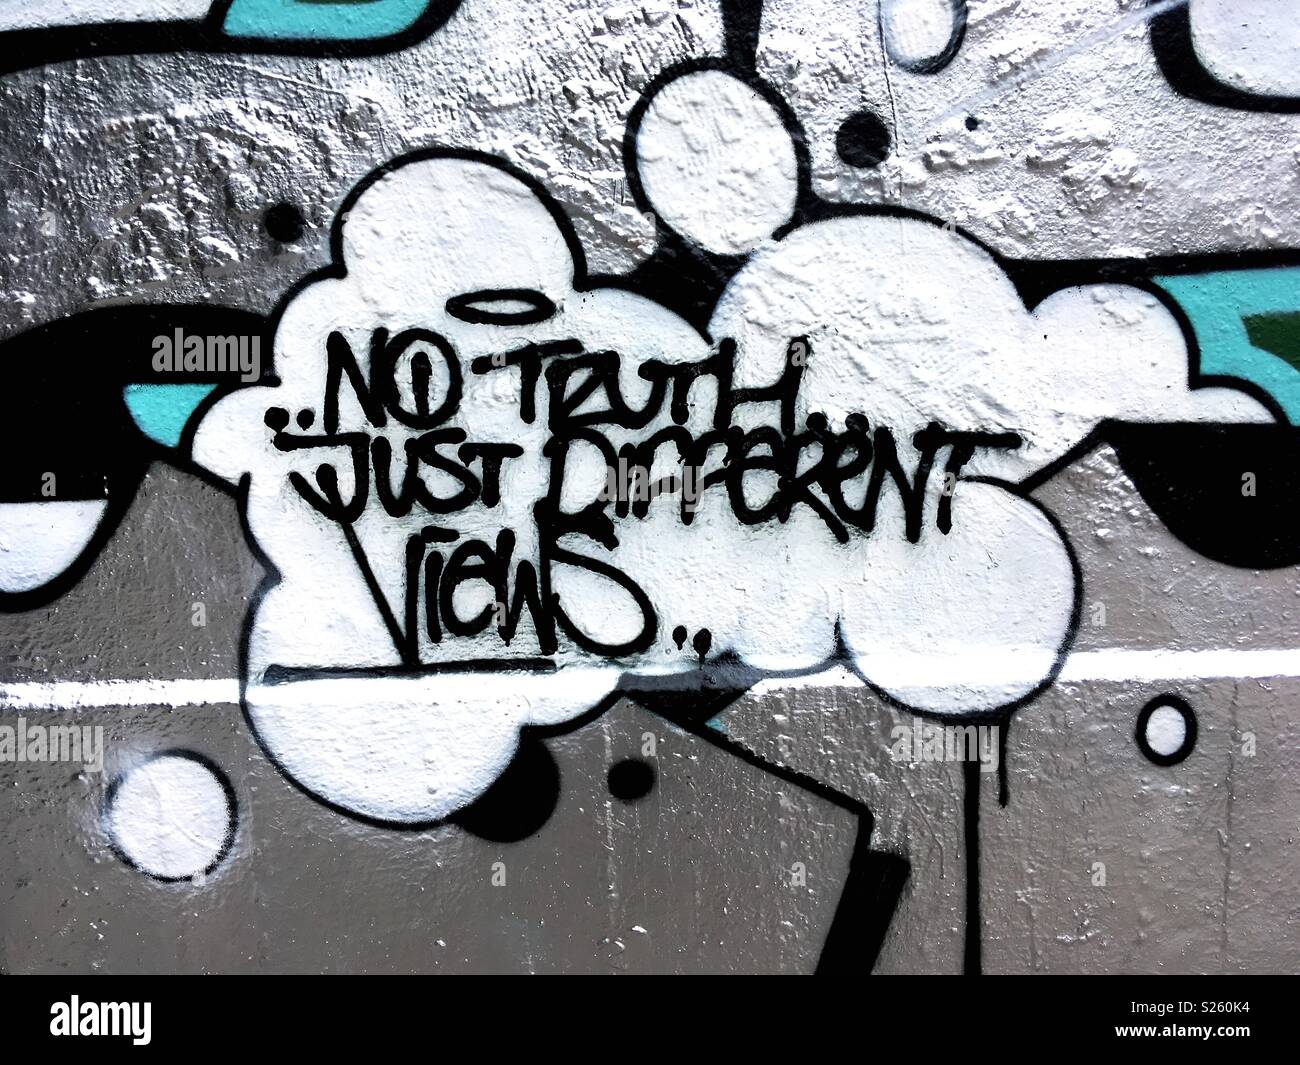 No truth just different views graffiti Stock Photo